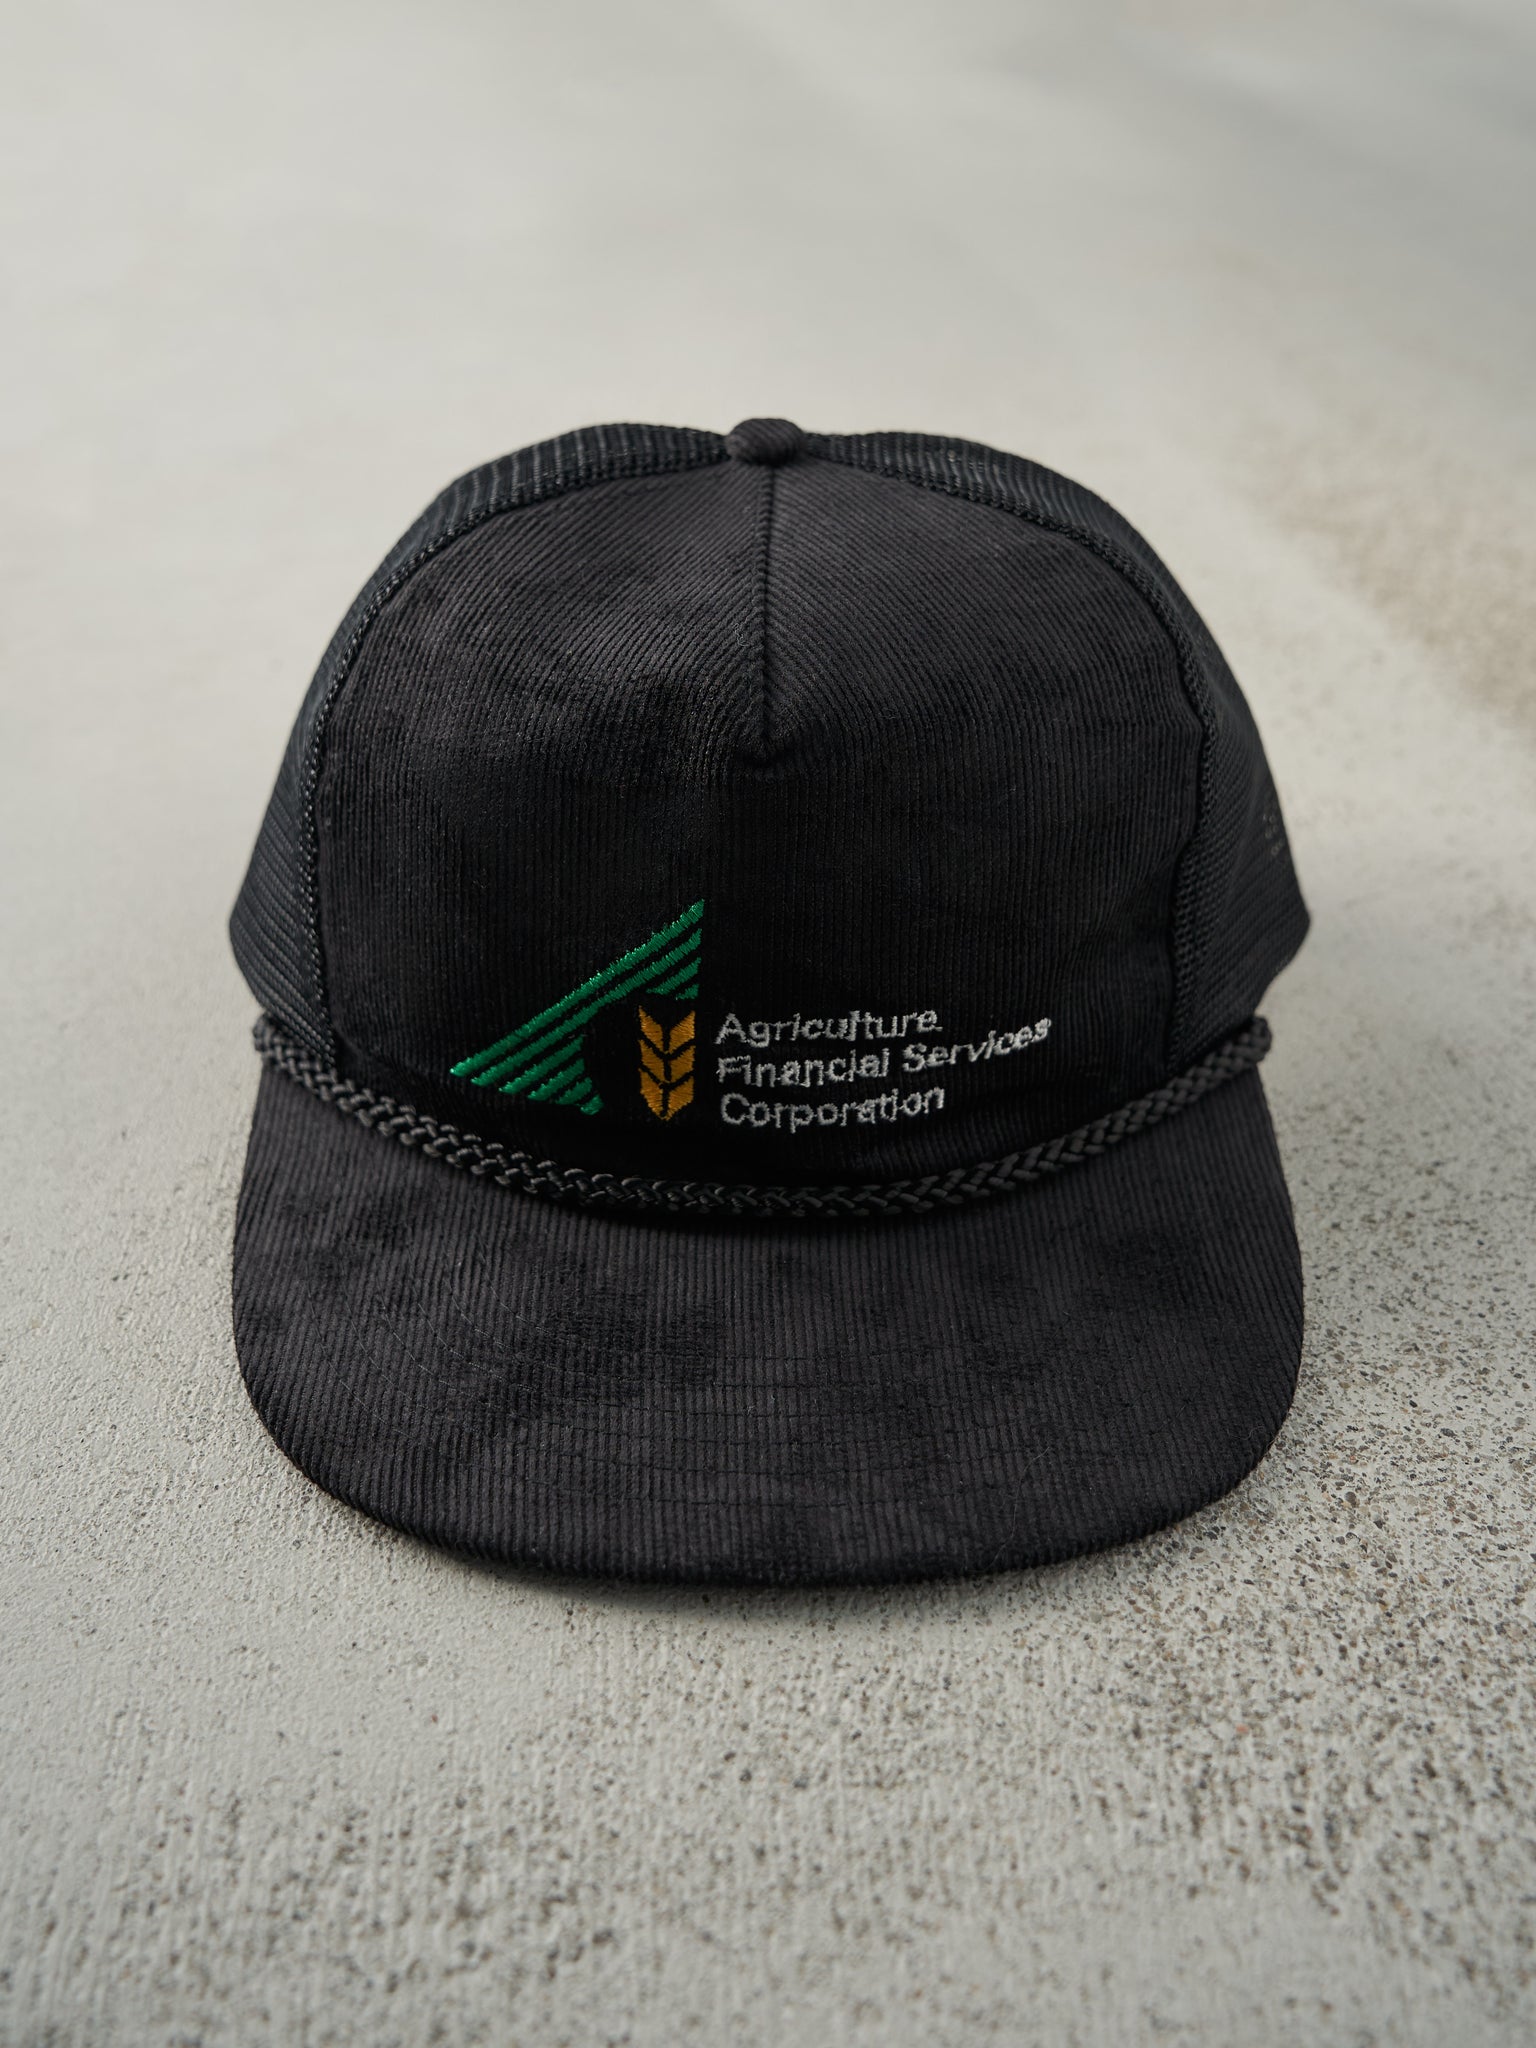 Vintage 80s Black Embroidered Agriculture Corduroy Trucker Hat